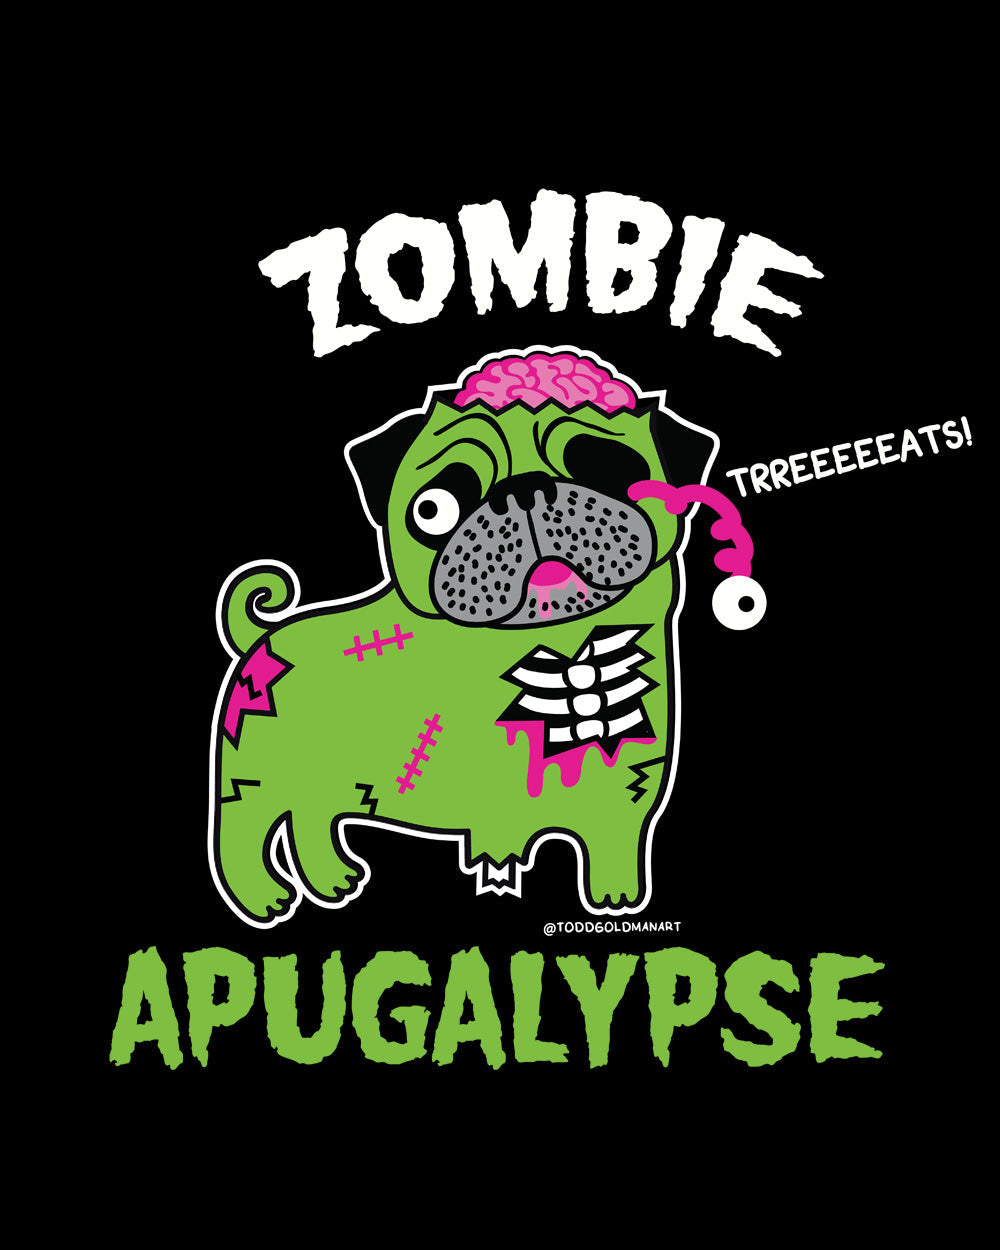 Zombie Apugalypse Pug Dog Brains Funny Zombie Apocalypse Monster Undead Slogan Humorous Cotton T-Shirt